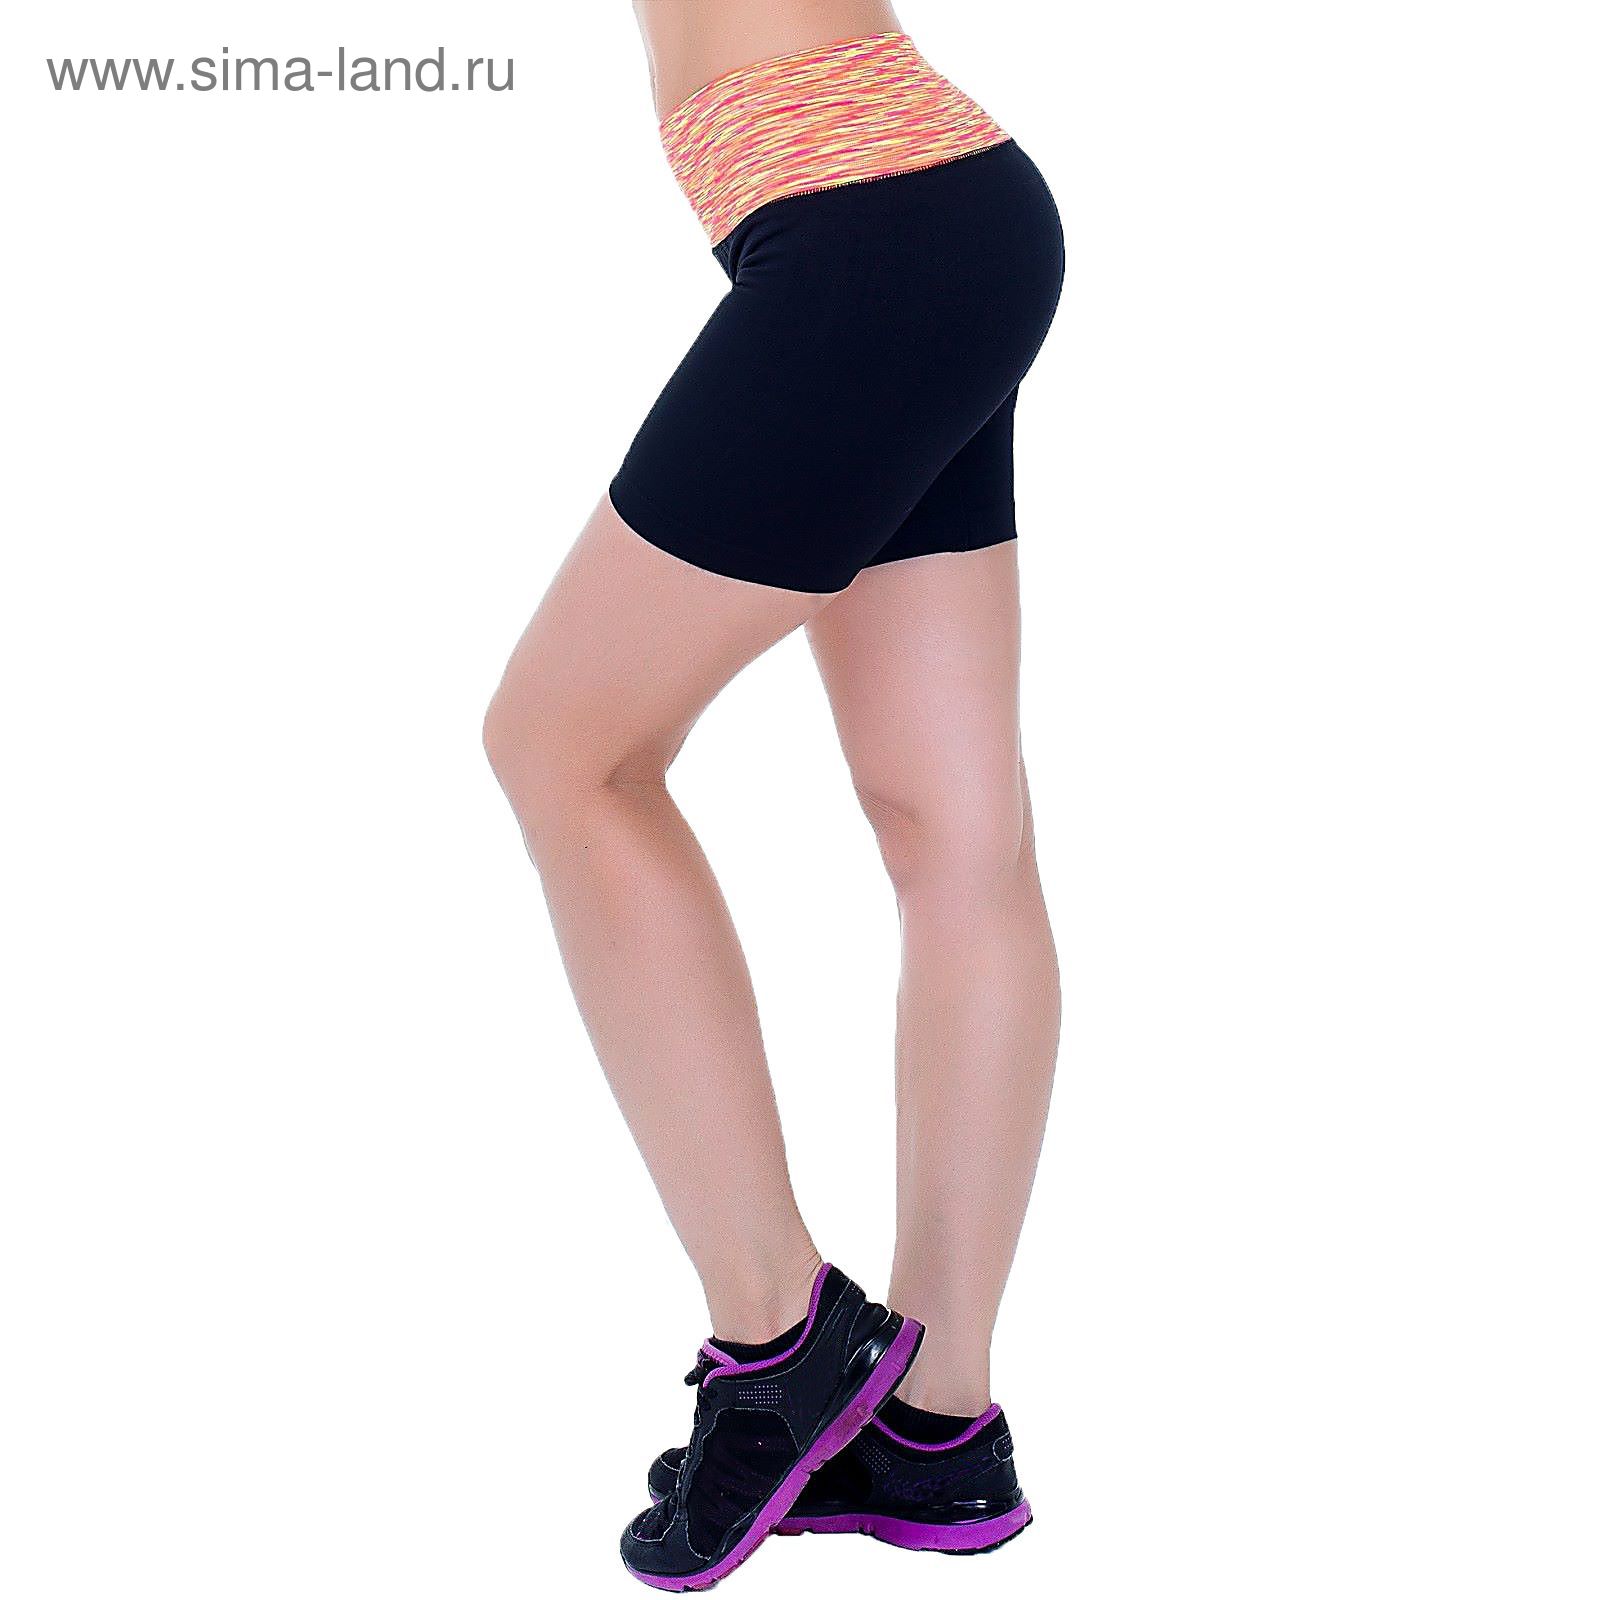 Спортивные шорты ONLITOP Fitness time coral, размер S-M (42-44)